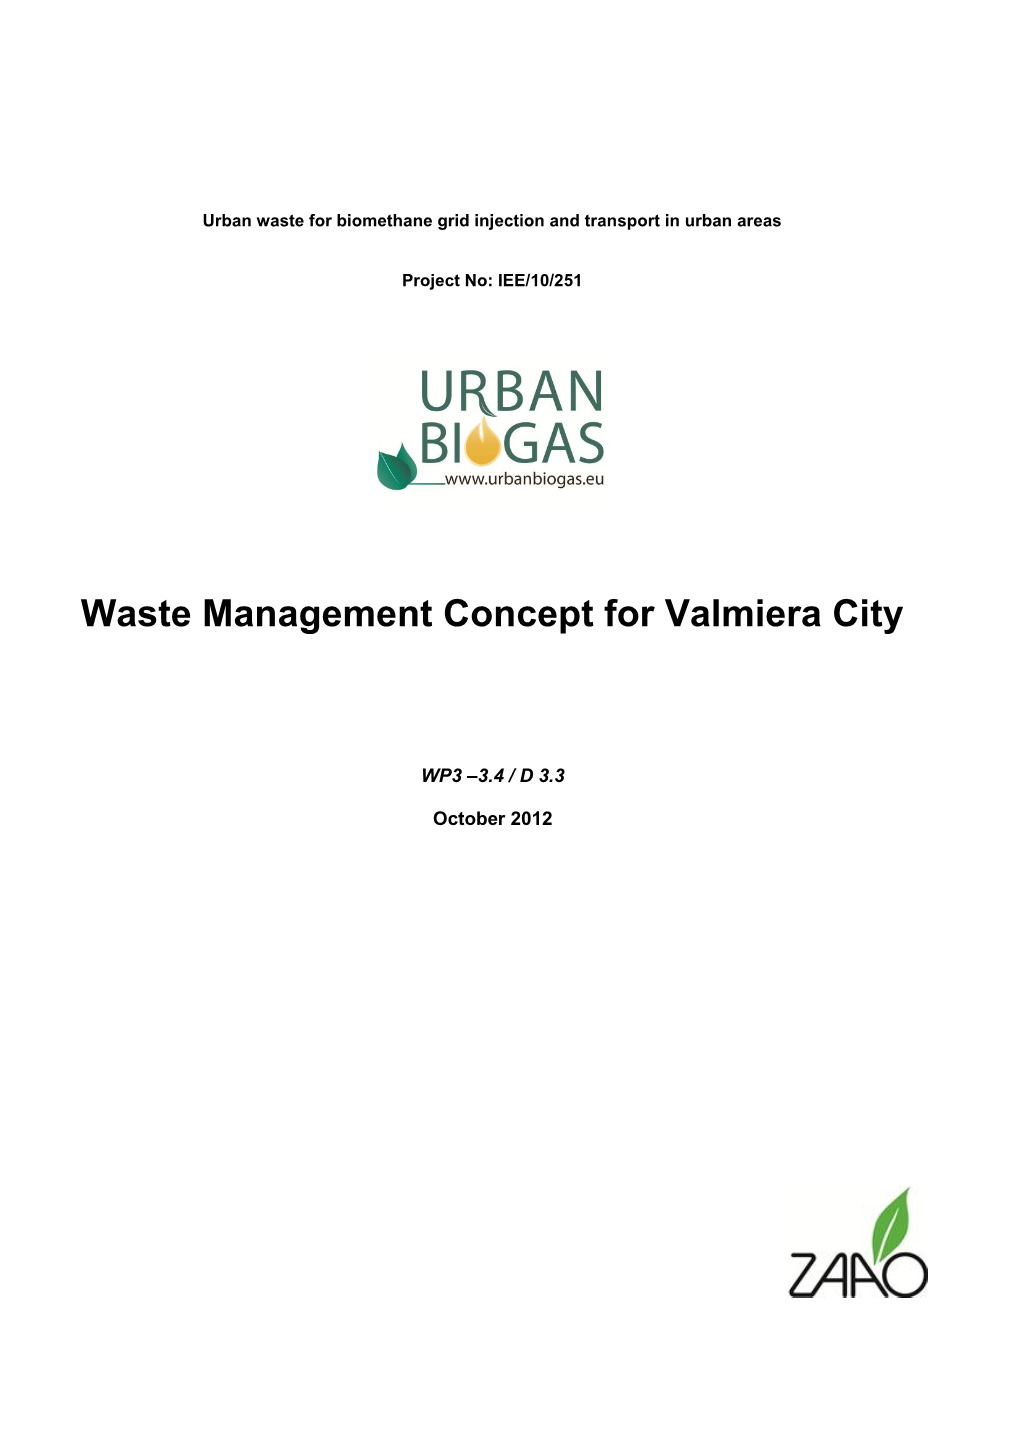 Waste Management Concept for Valmiera City